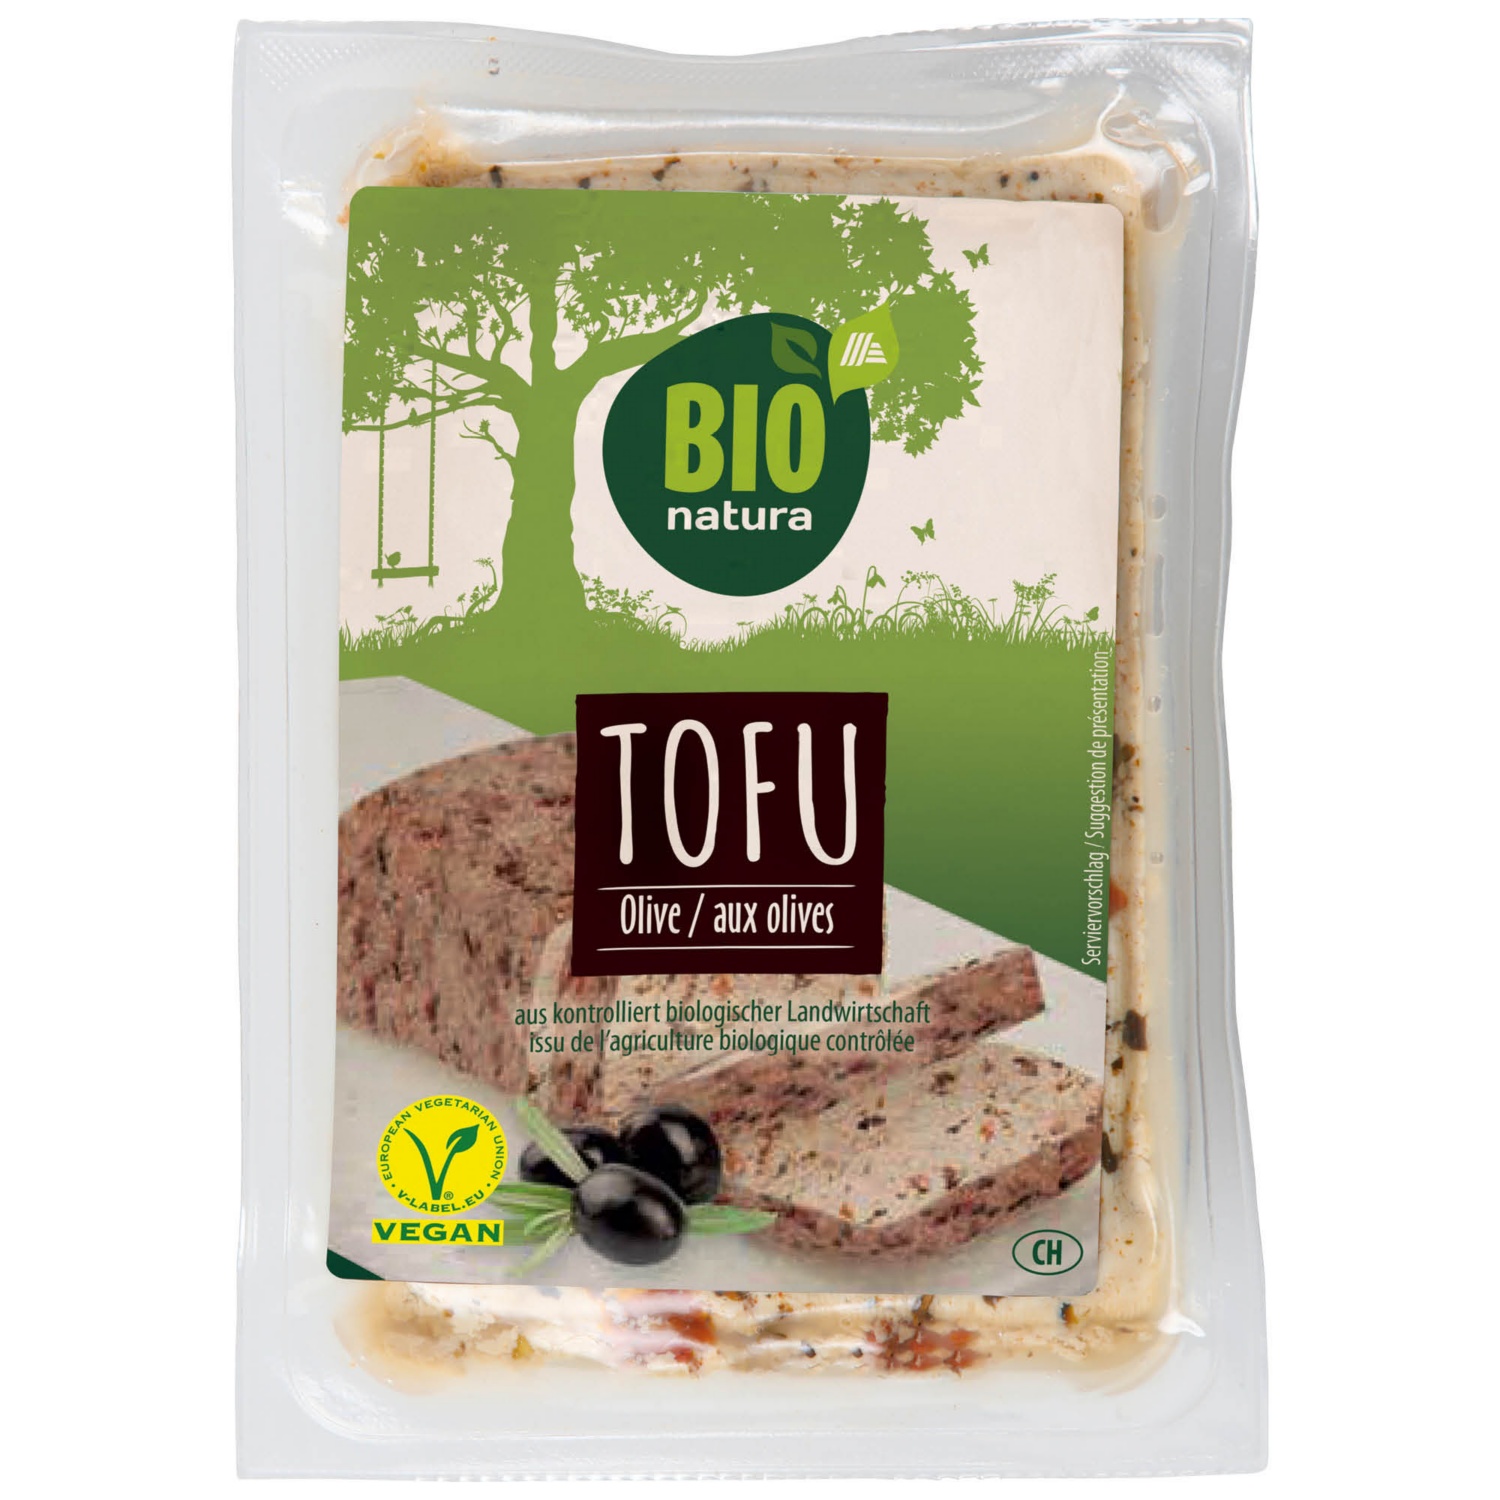 BIO NATURA Tofu, mit Oliven